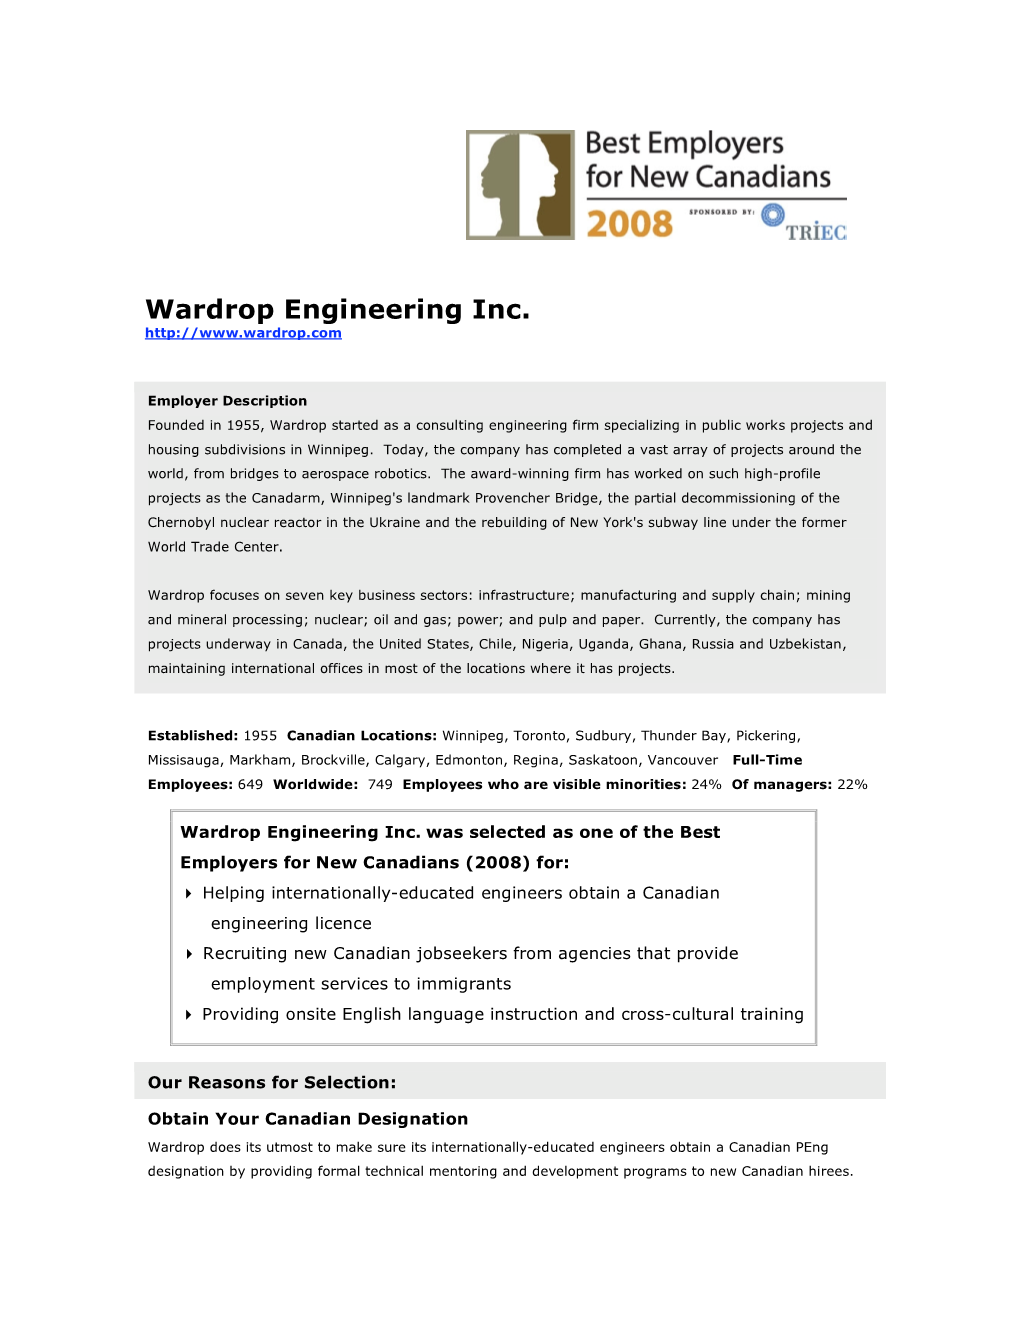 Wardrop Engineering Inc